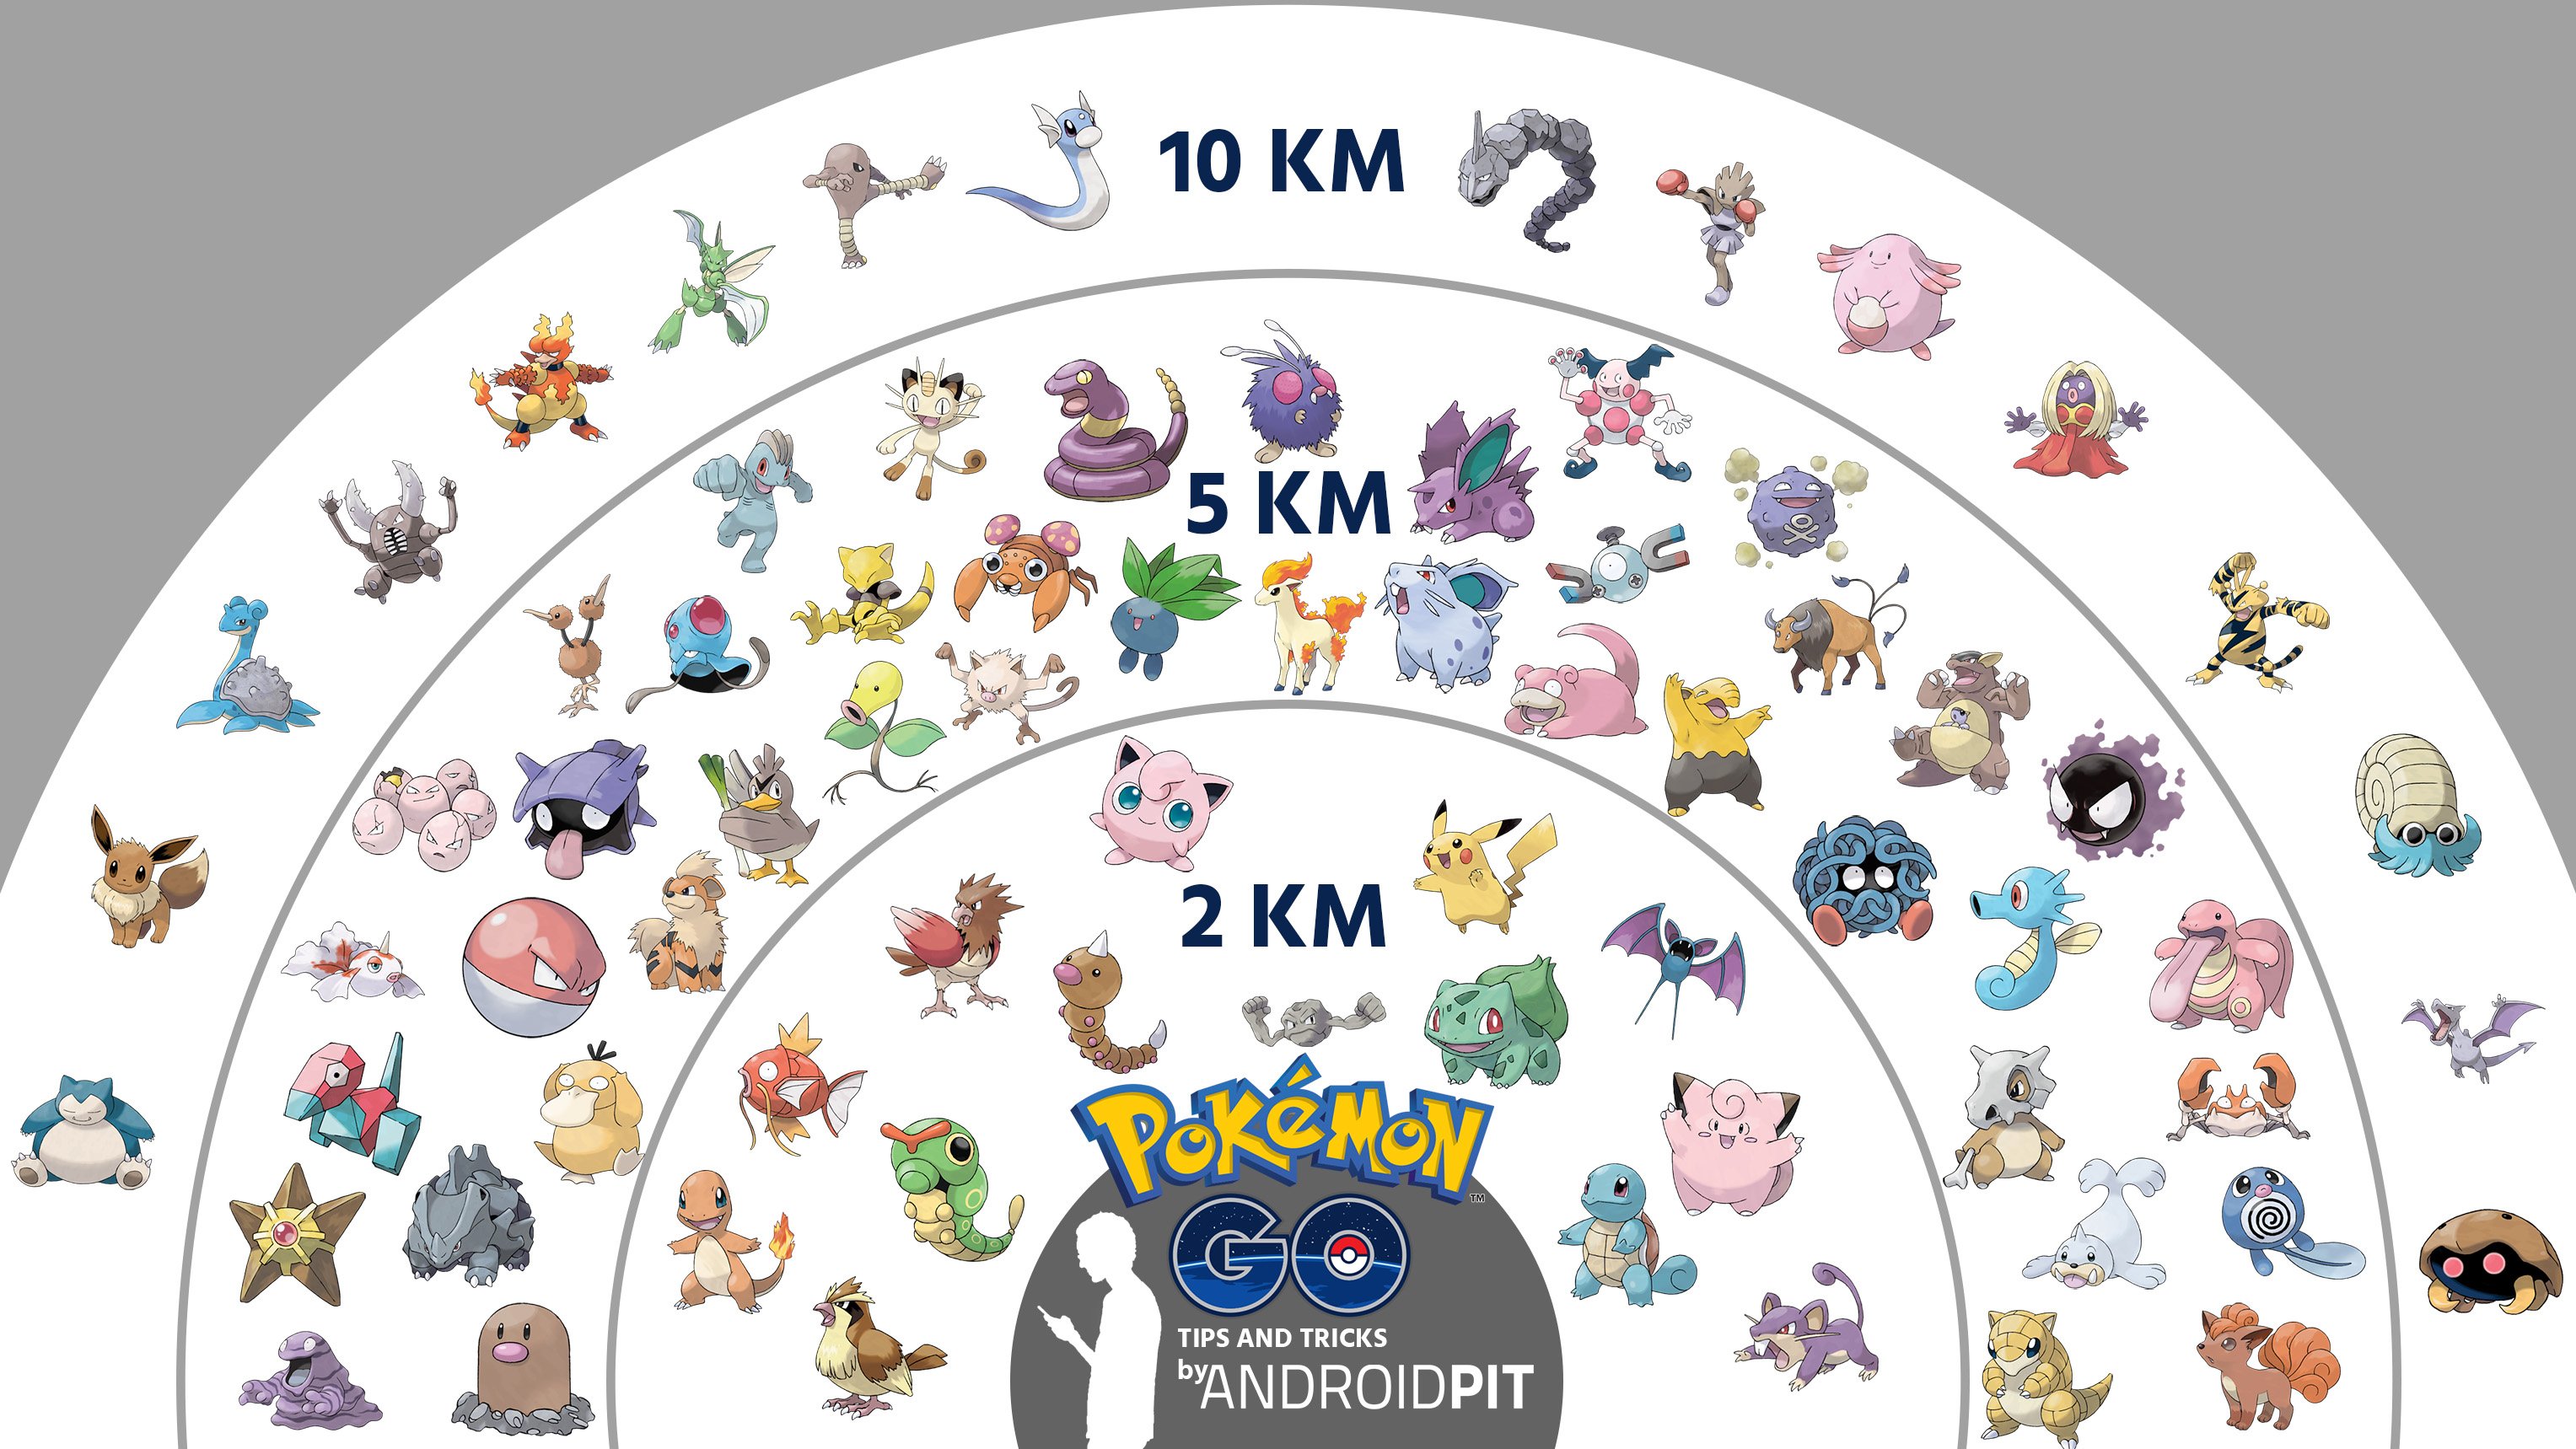 Pokémon GO Lo que está realmente evolucionando no son tus